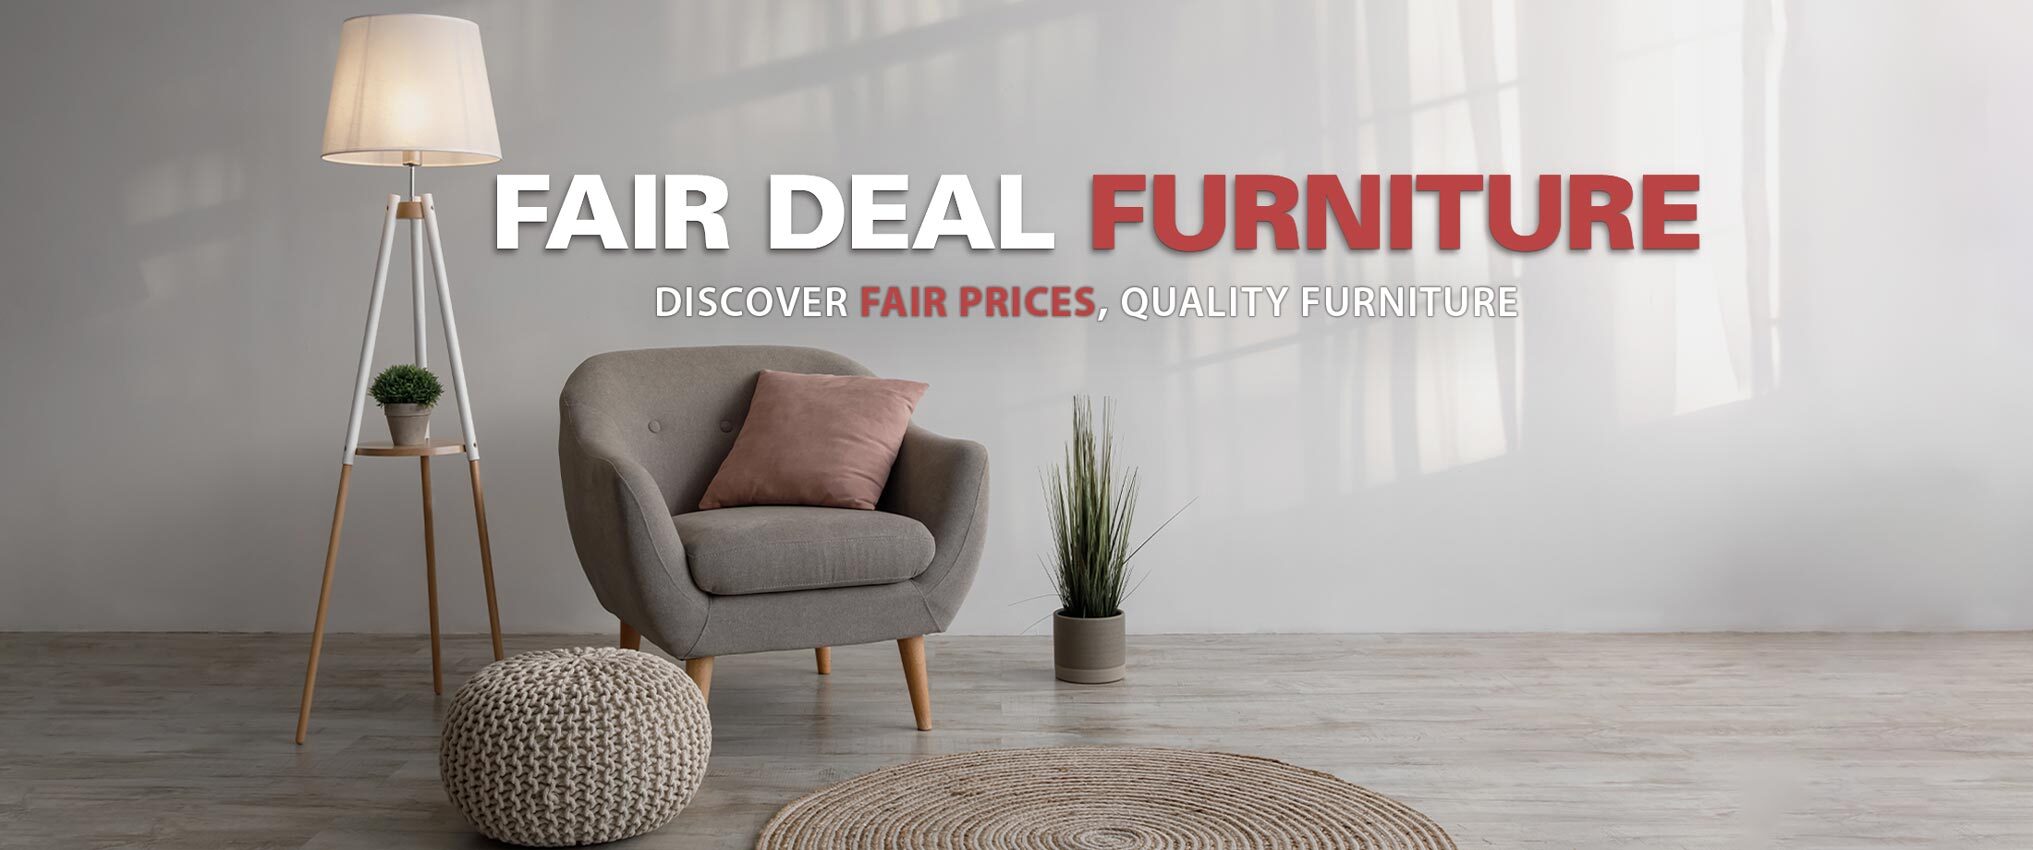 Fair Deal Furniture discover fair prices, quality furniture